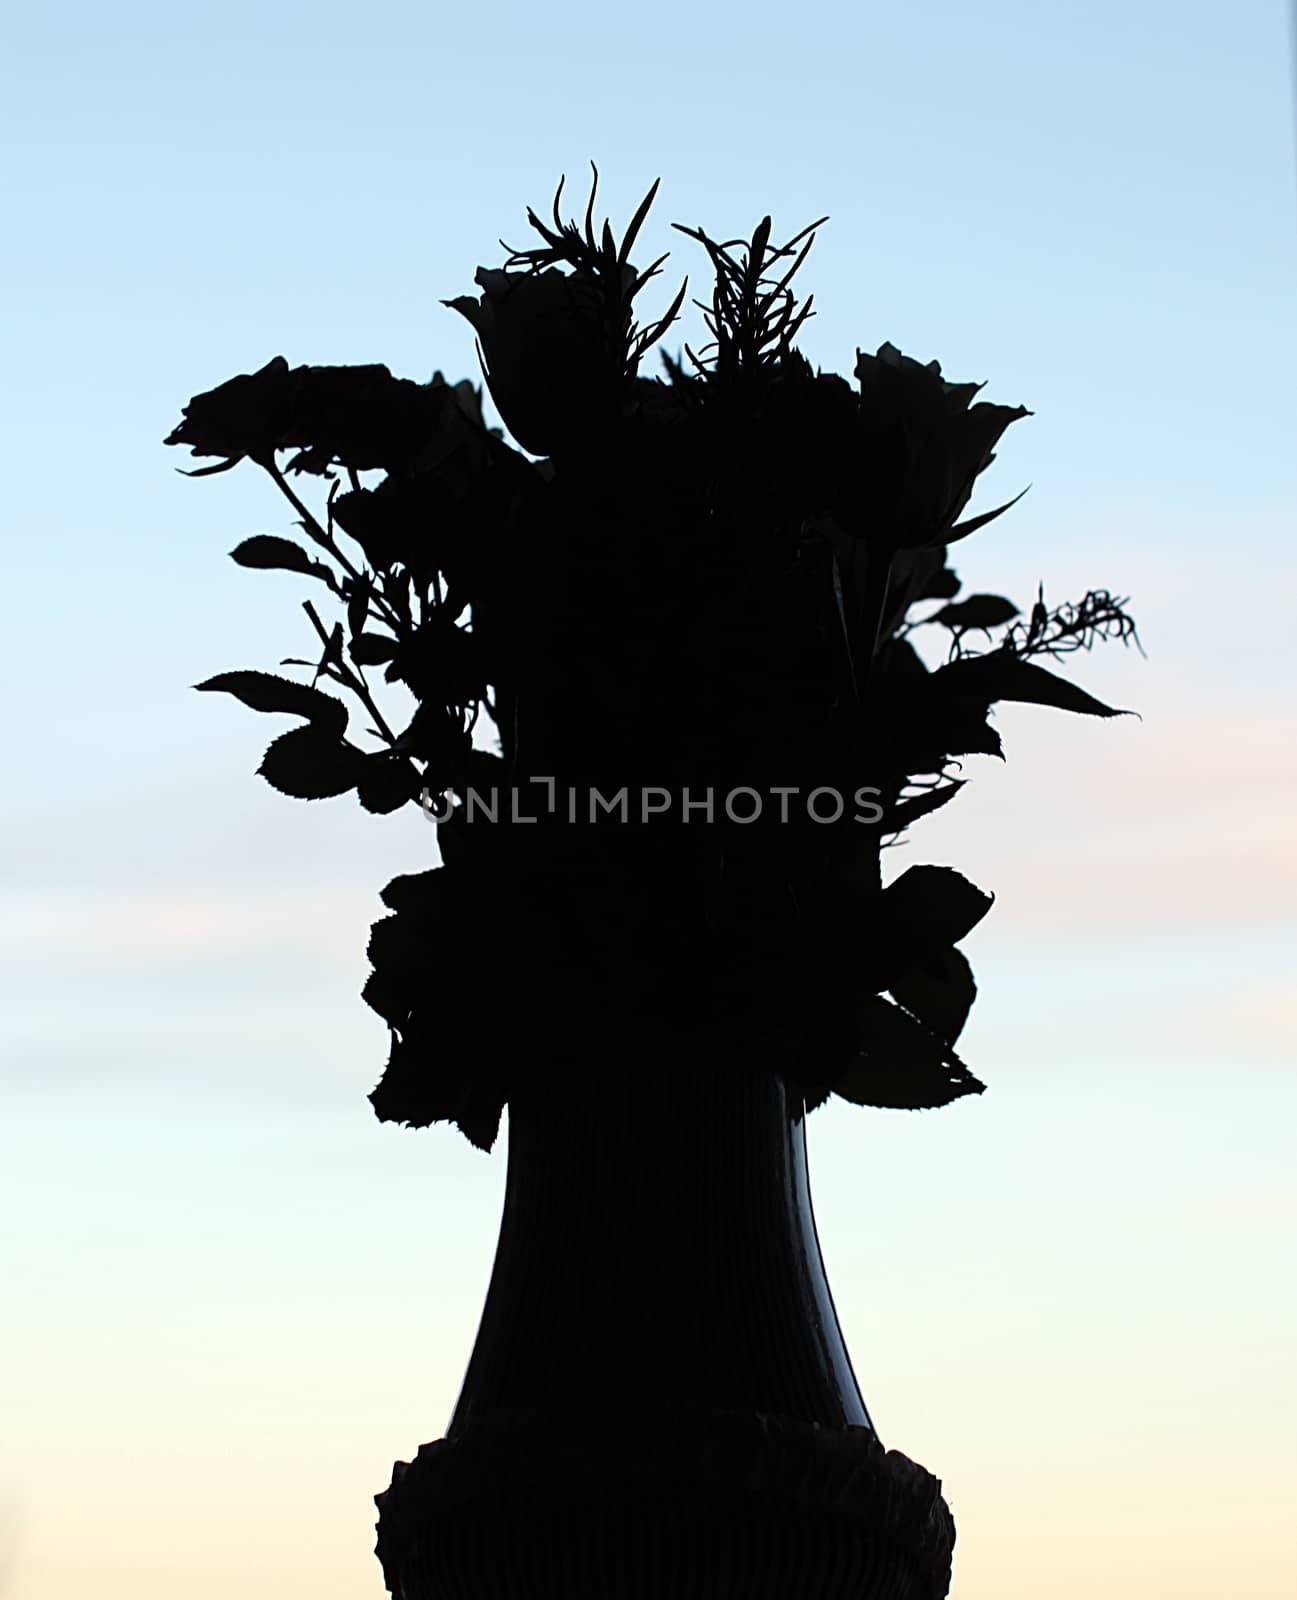 Decorative flower vase silhouette by sundaune